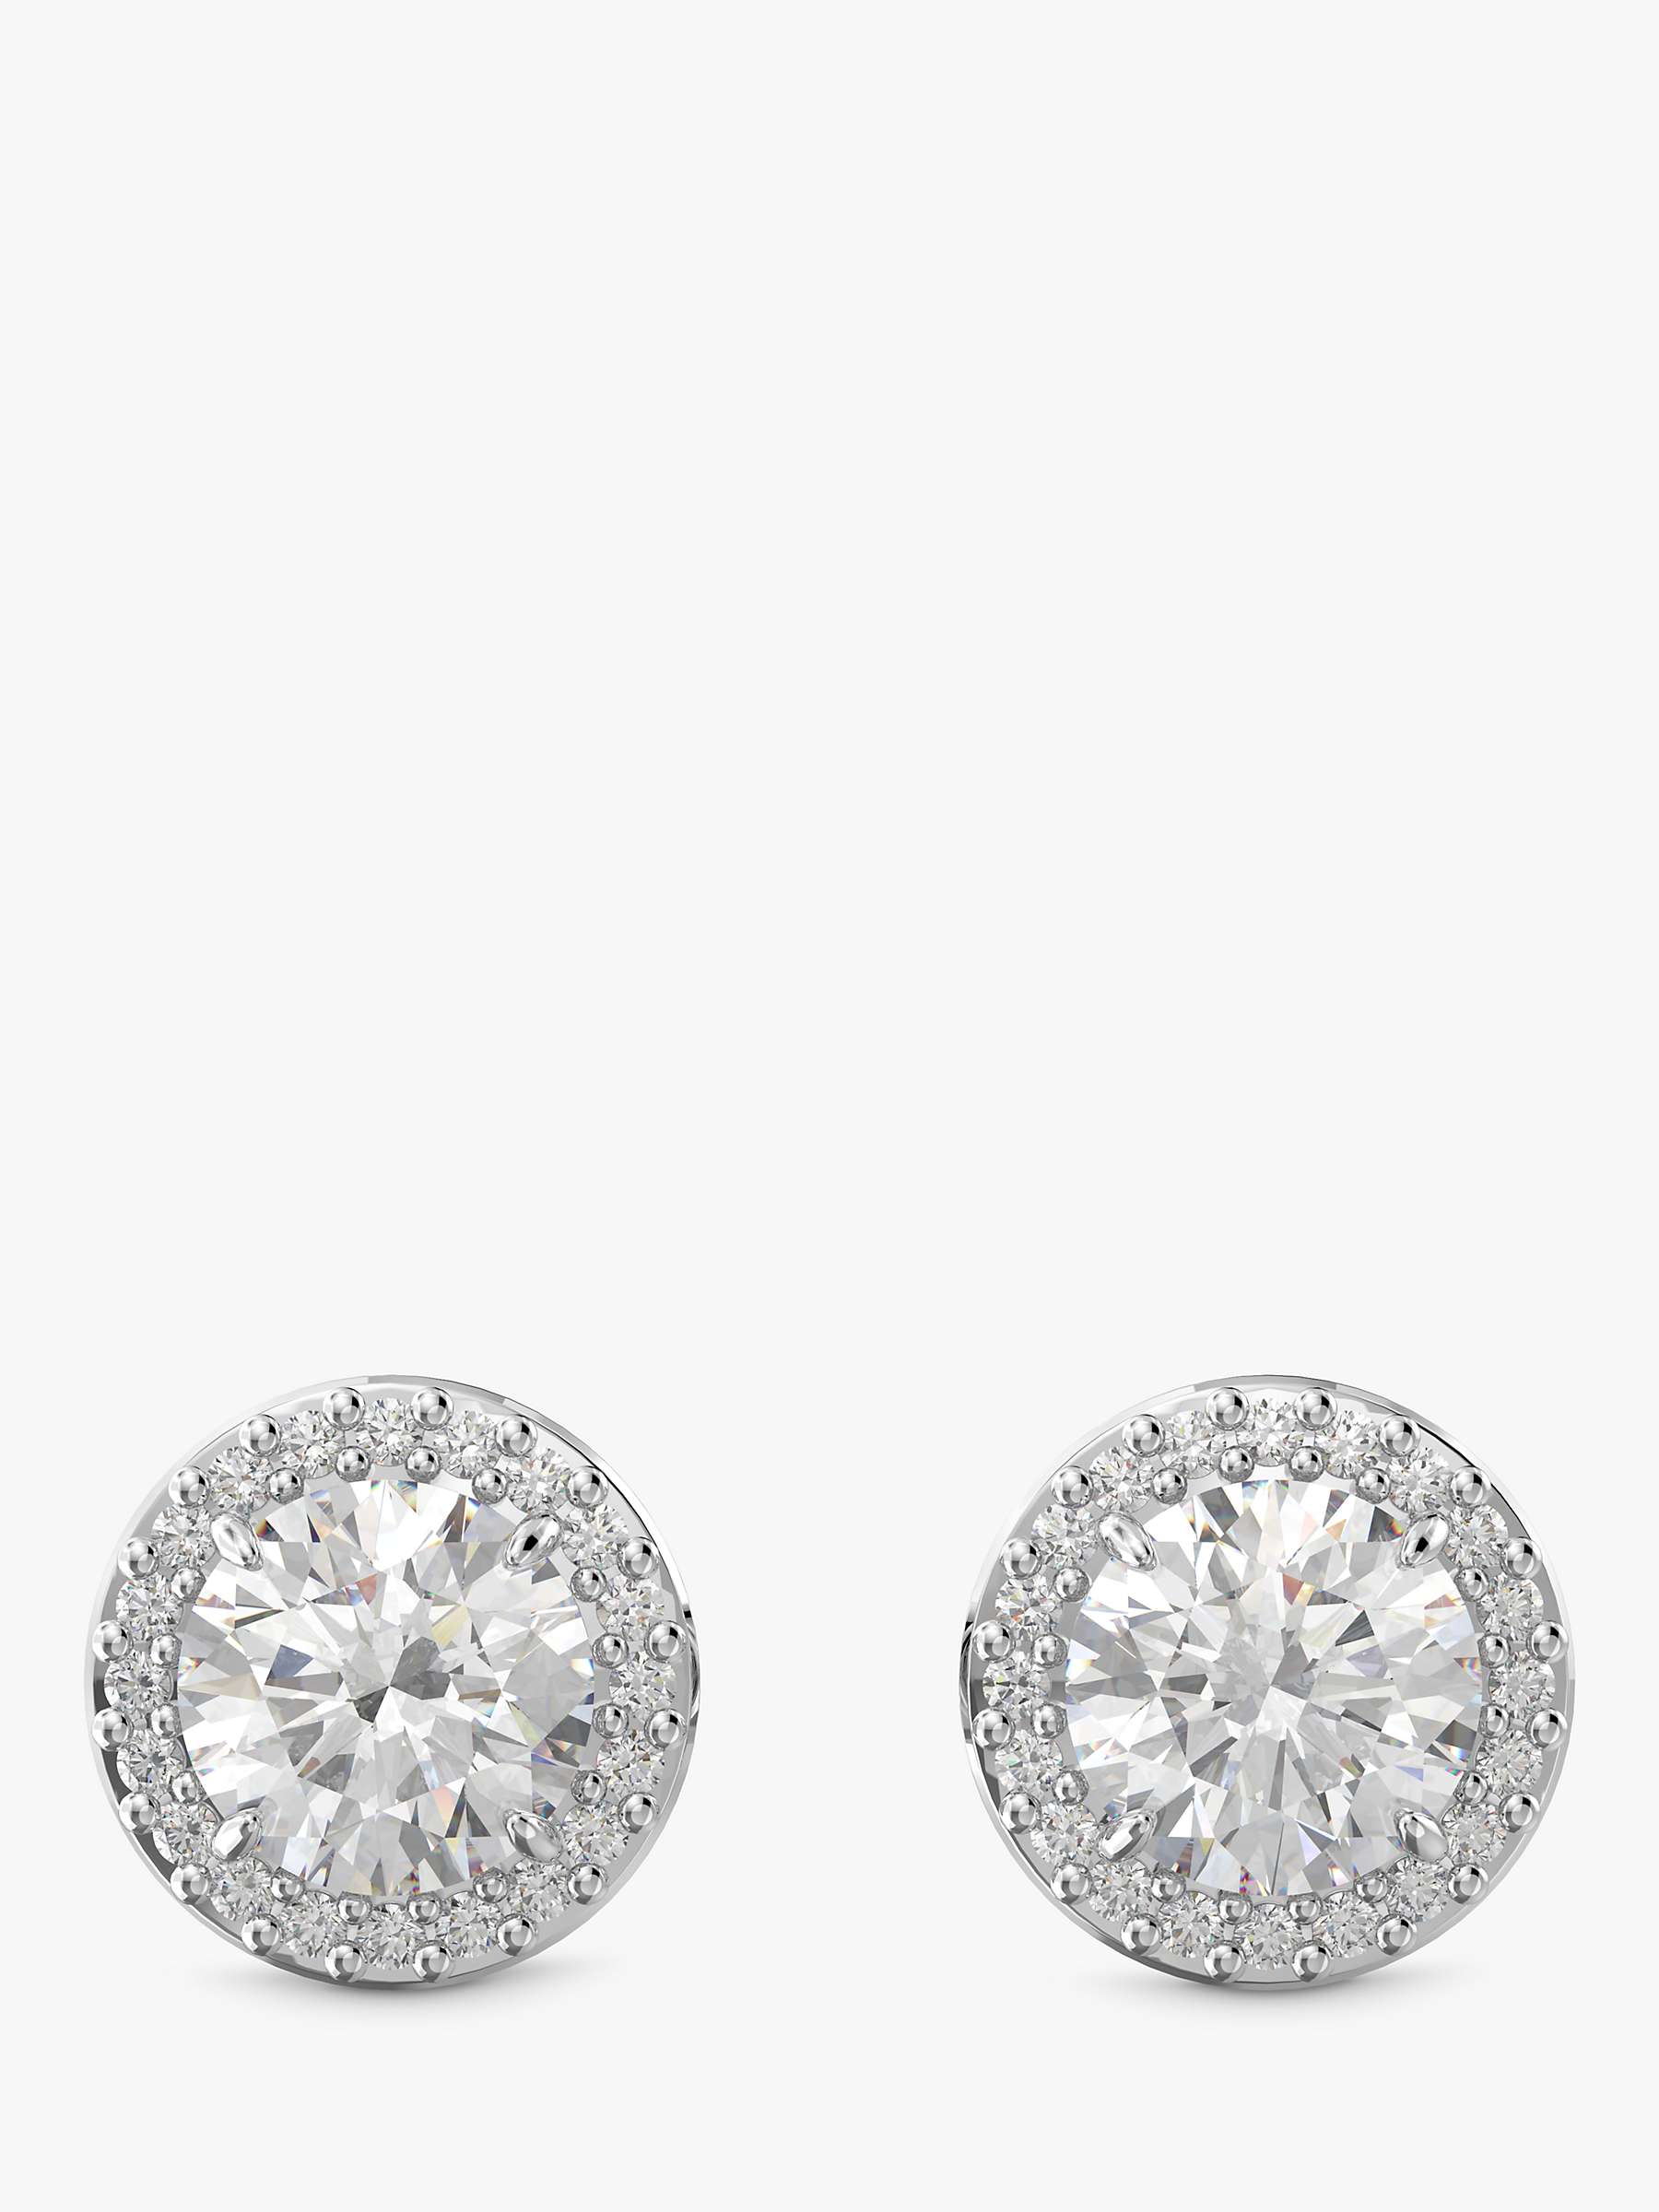 Buy Swarovski Contsella Round Crystal Stud Earrings, Silver Online at johnlewis.com